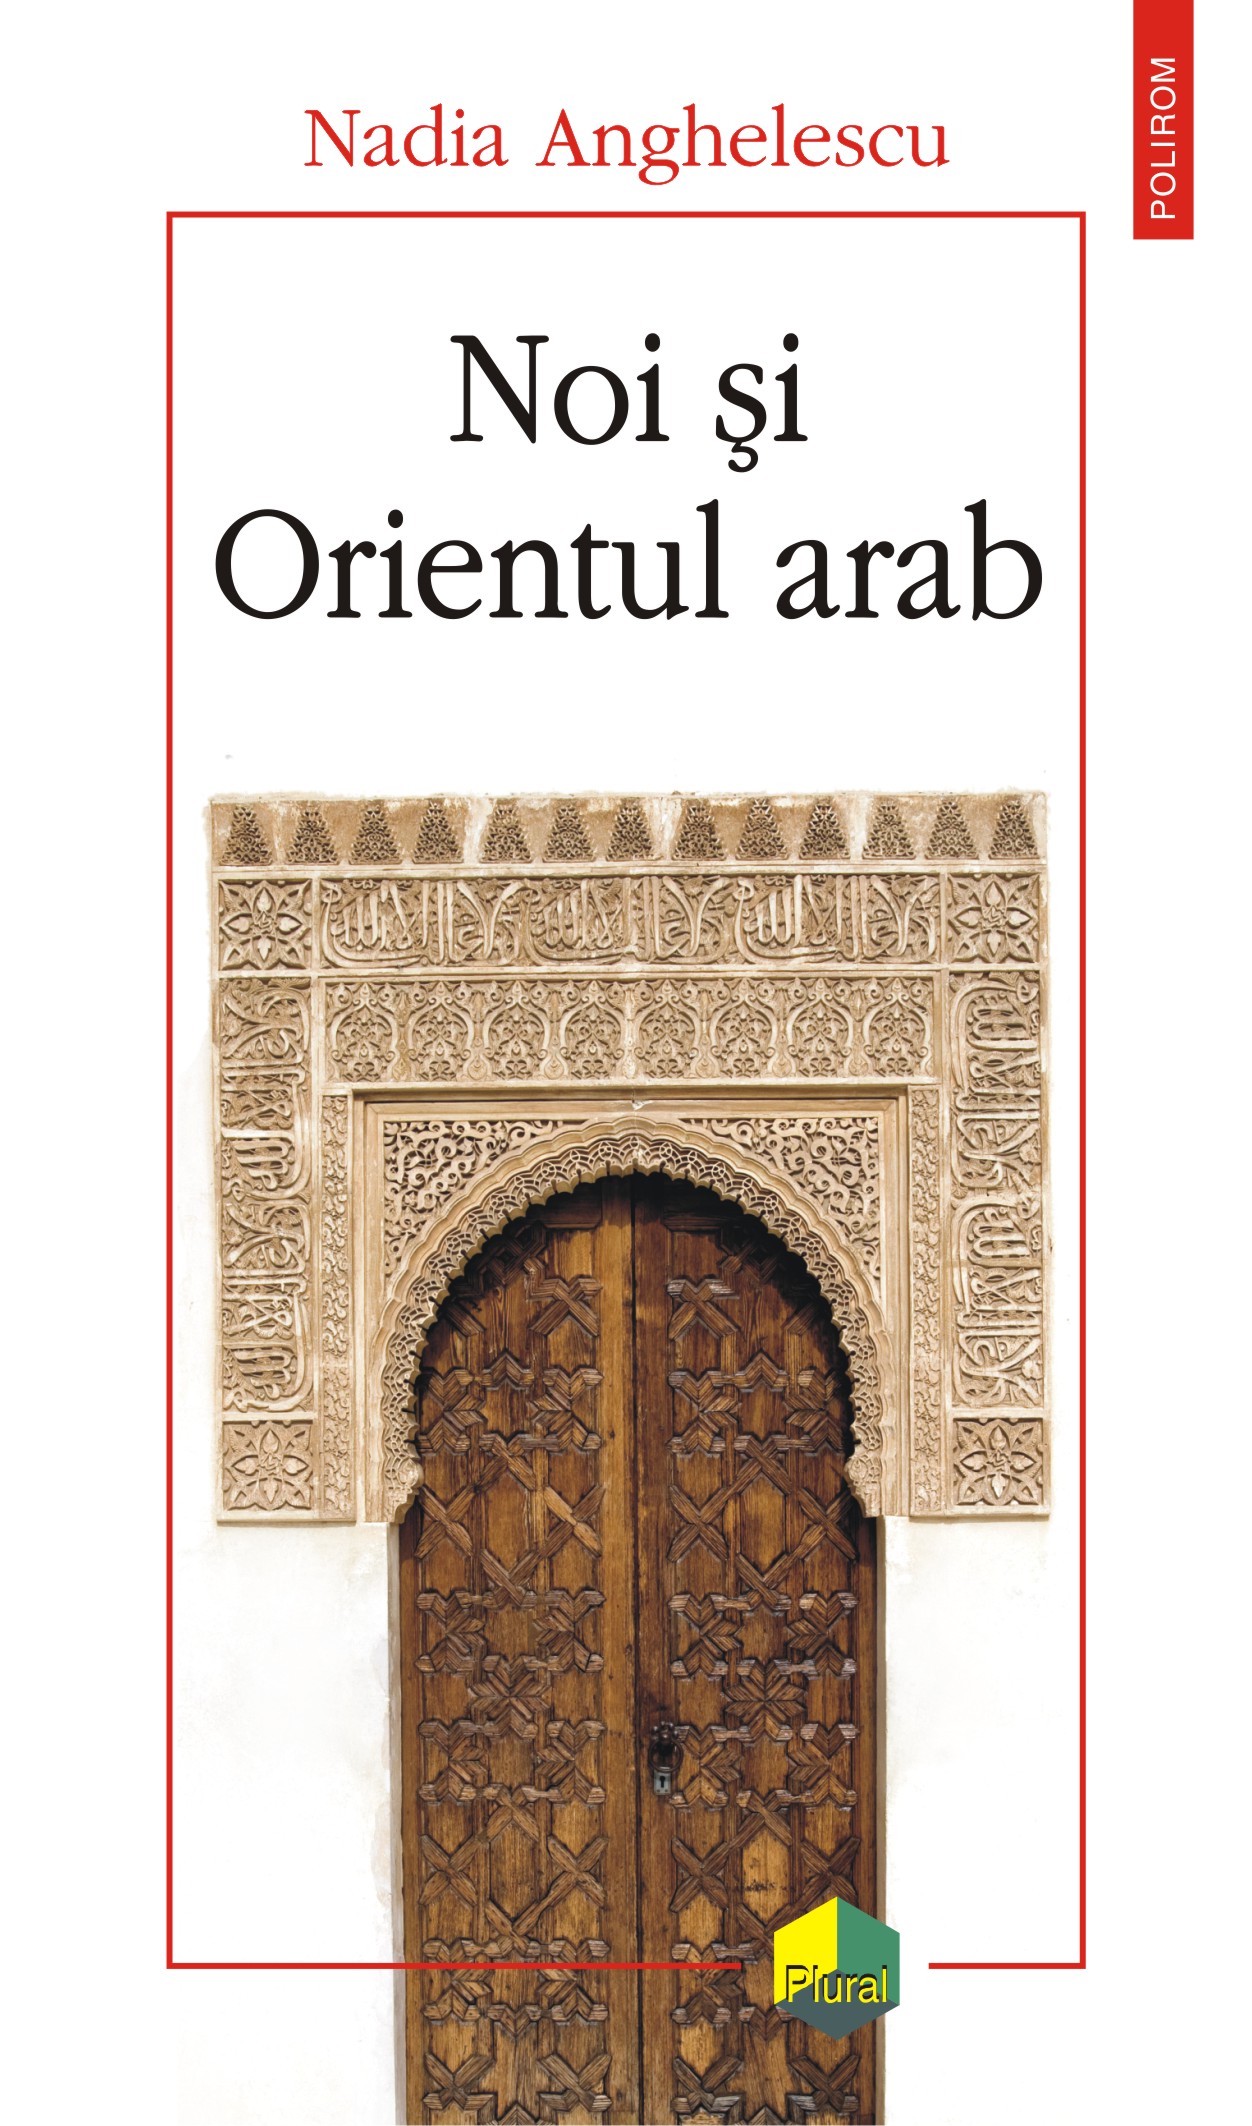 eBook Noi si Orientul arab - Nadia Anghelescu